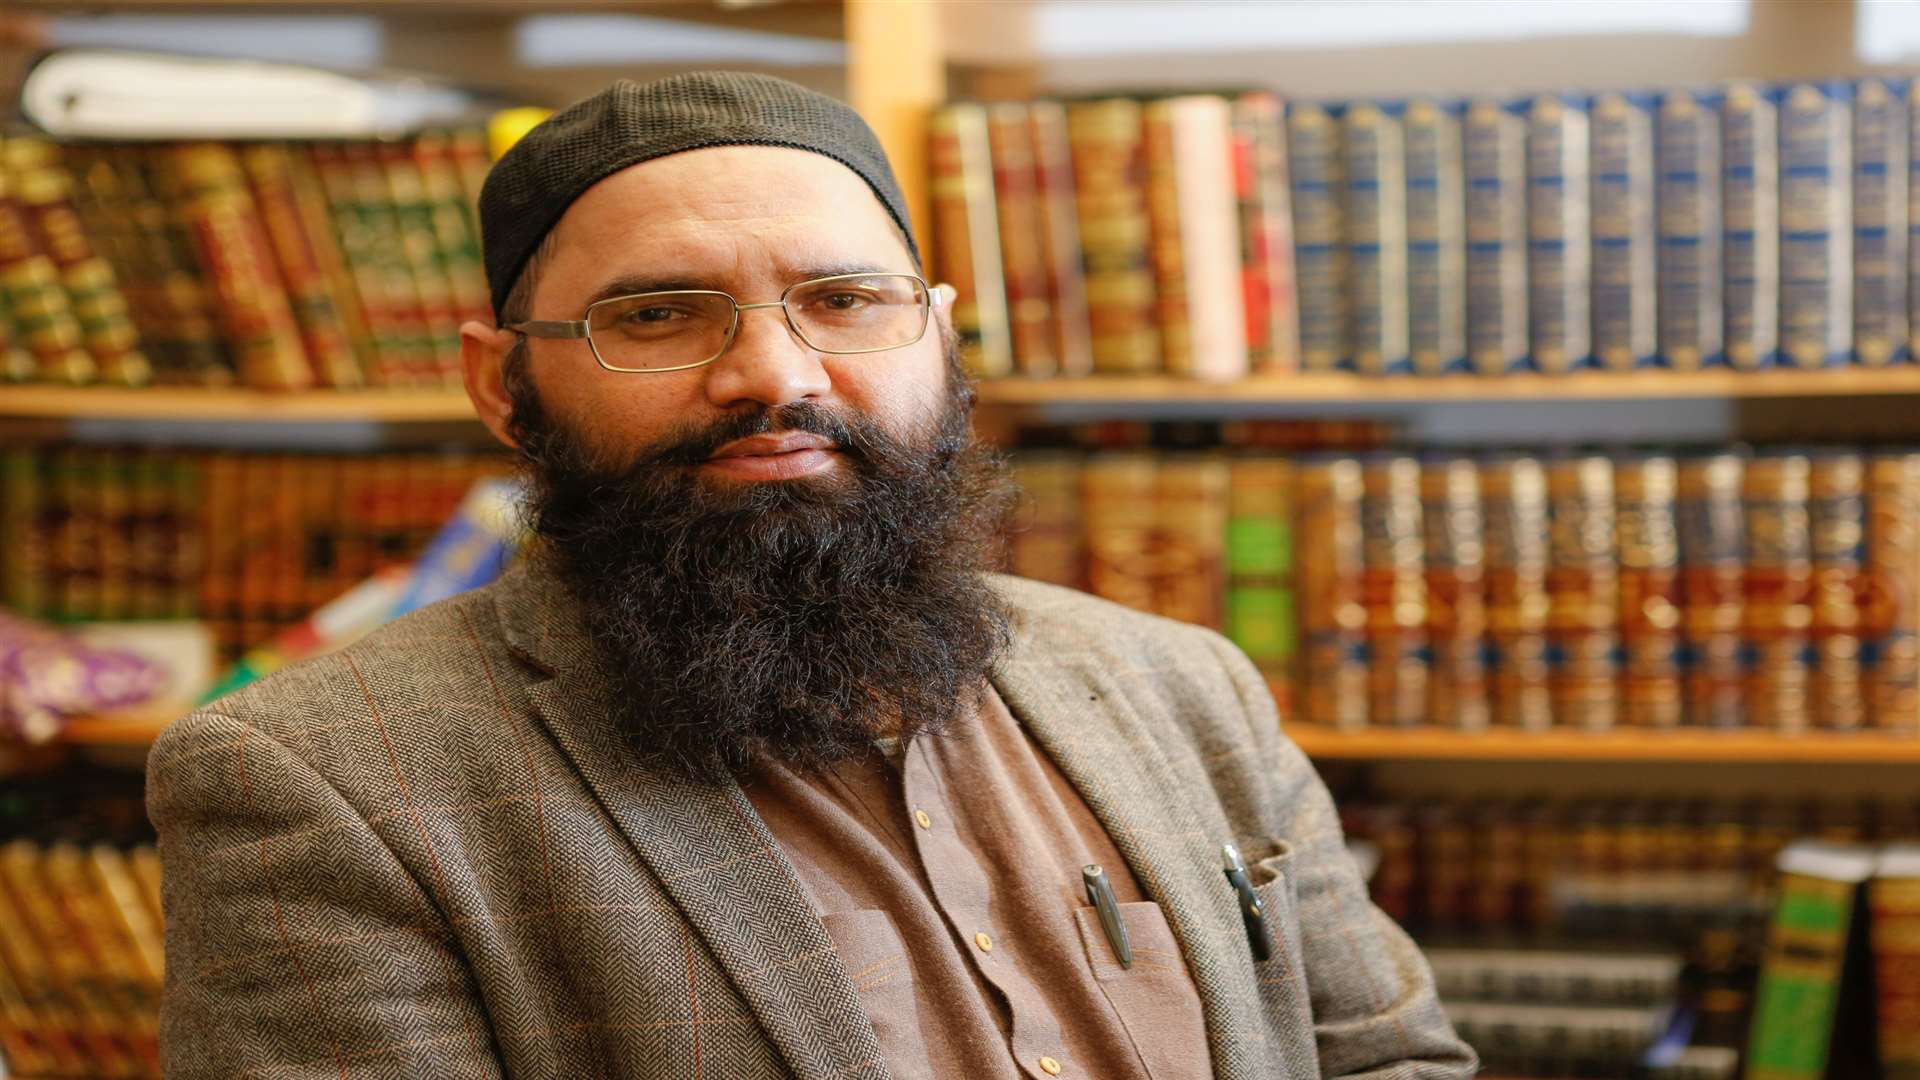 Dr Muhammad Shabbir Usmani. imam of Maidstone Mosque, condemns